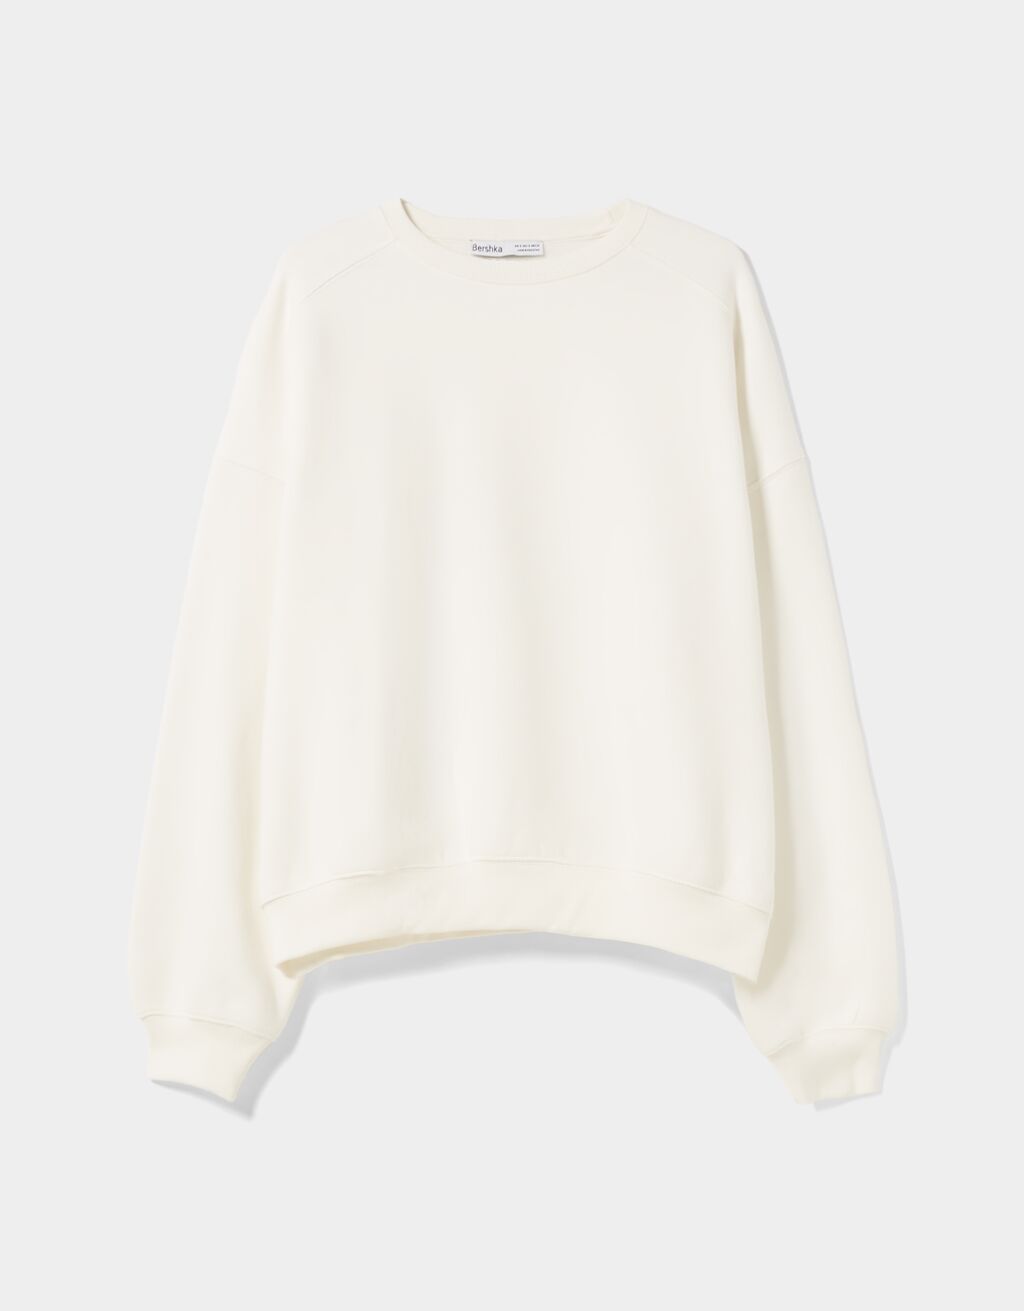 WOMEN FASHION Jumpers & Sweatshirts Hoodie discount 95% White/Multicolored S Bershka sweatshirt 